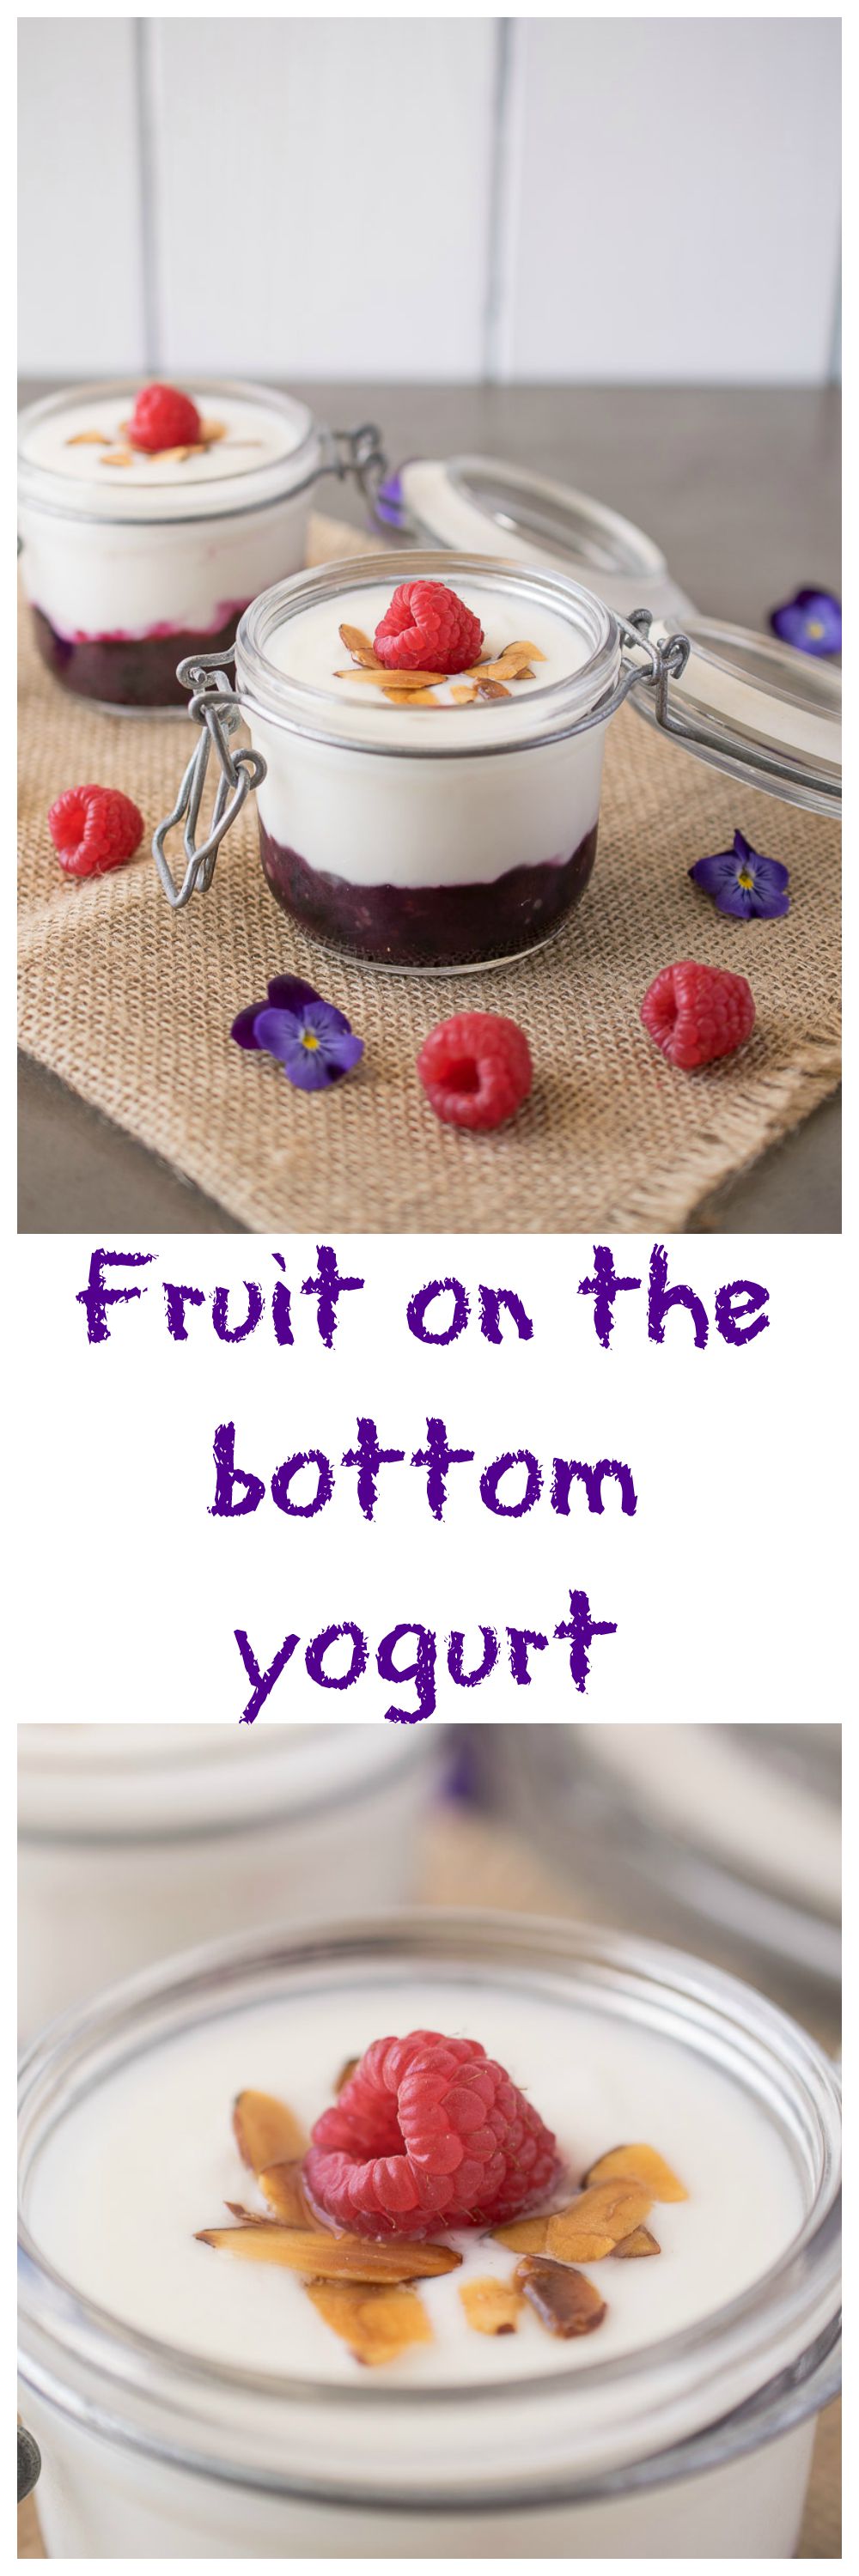 Fruit on the bottom yogurt